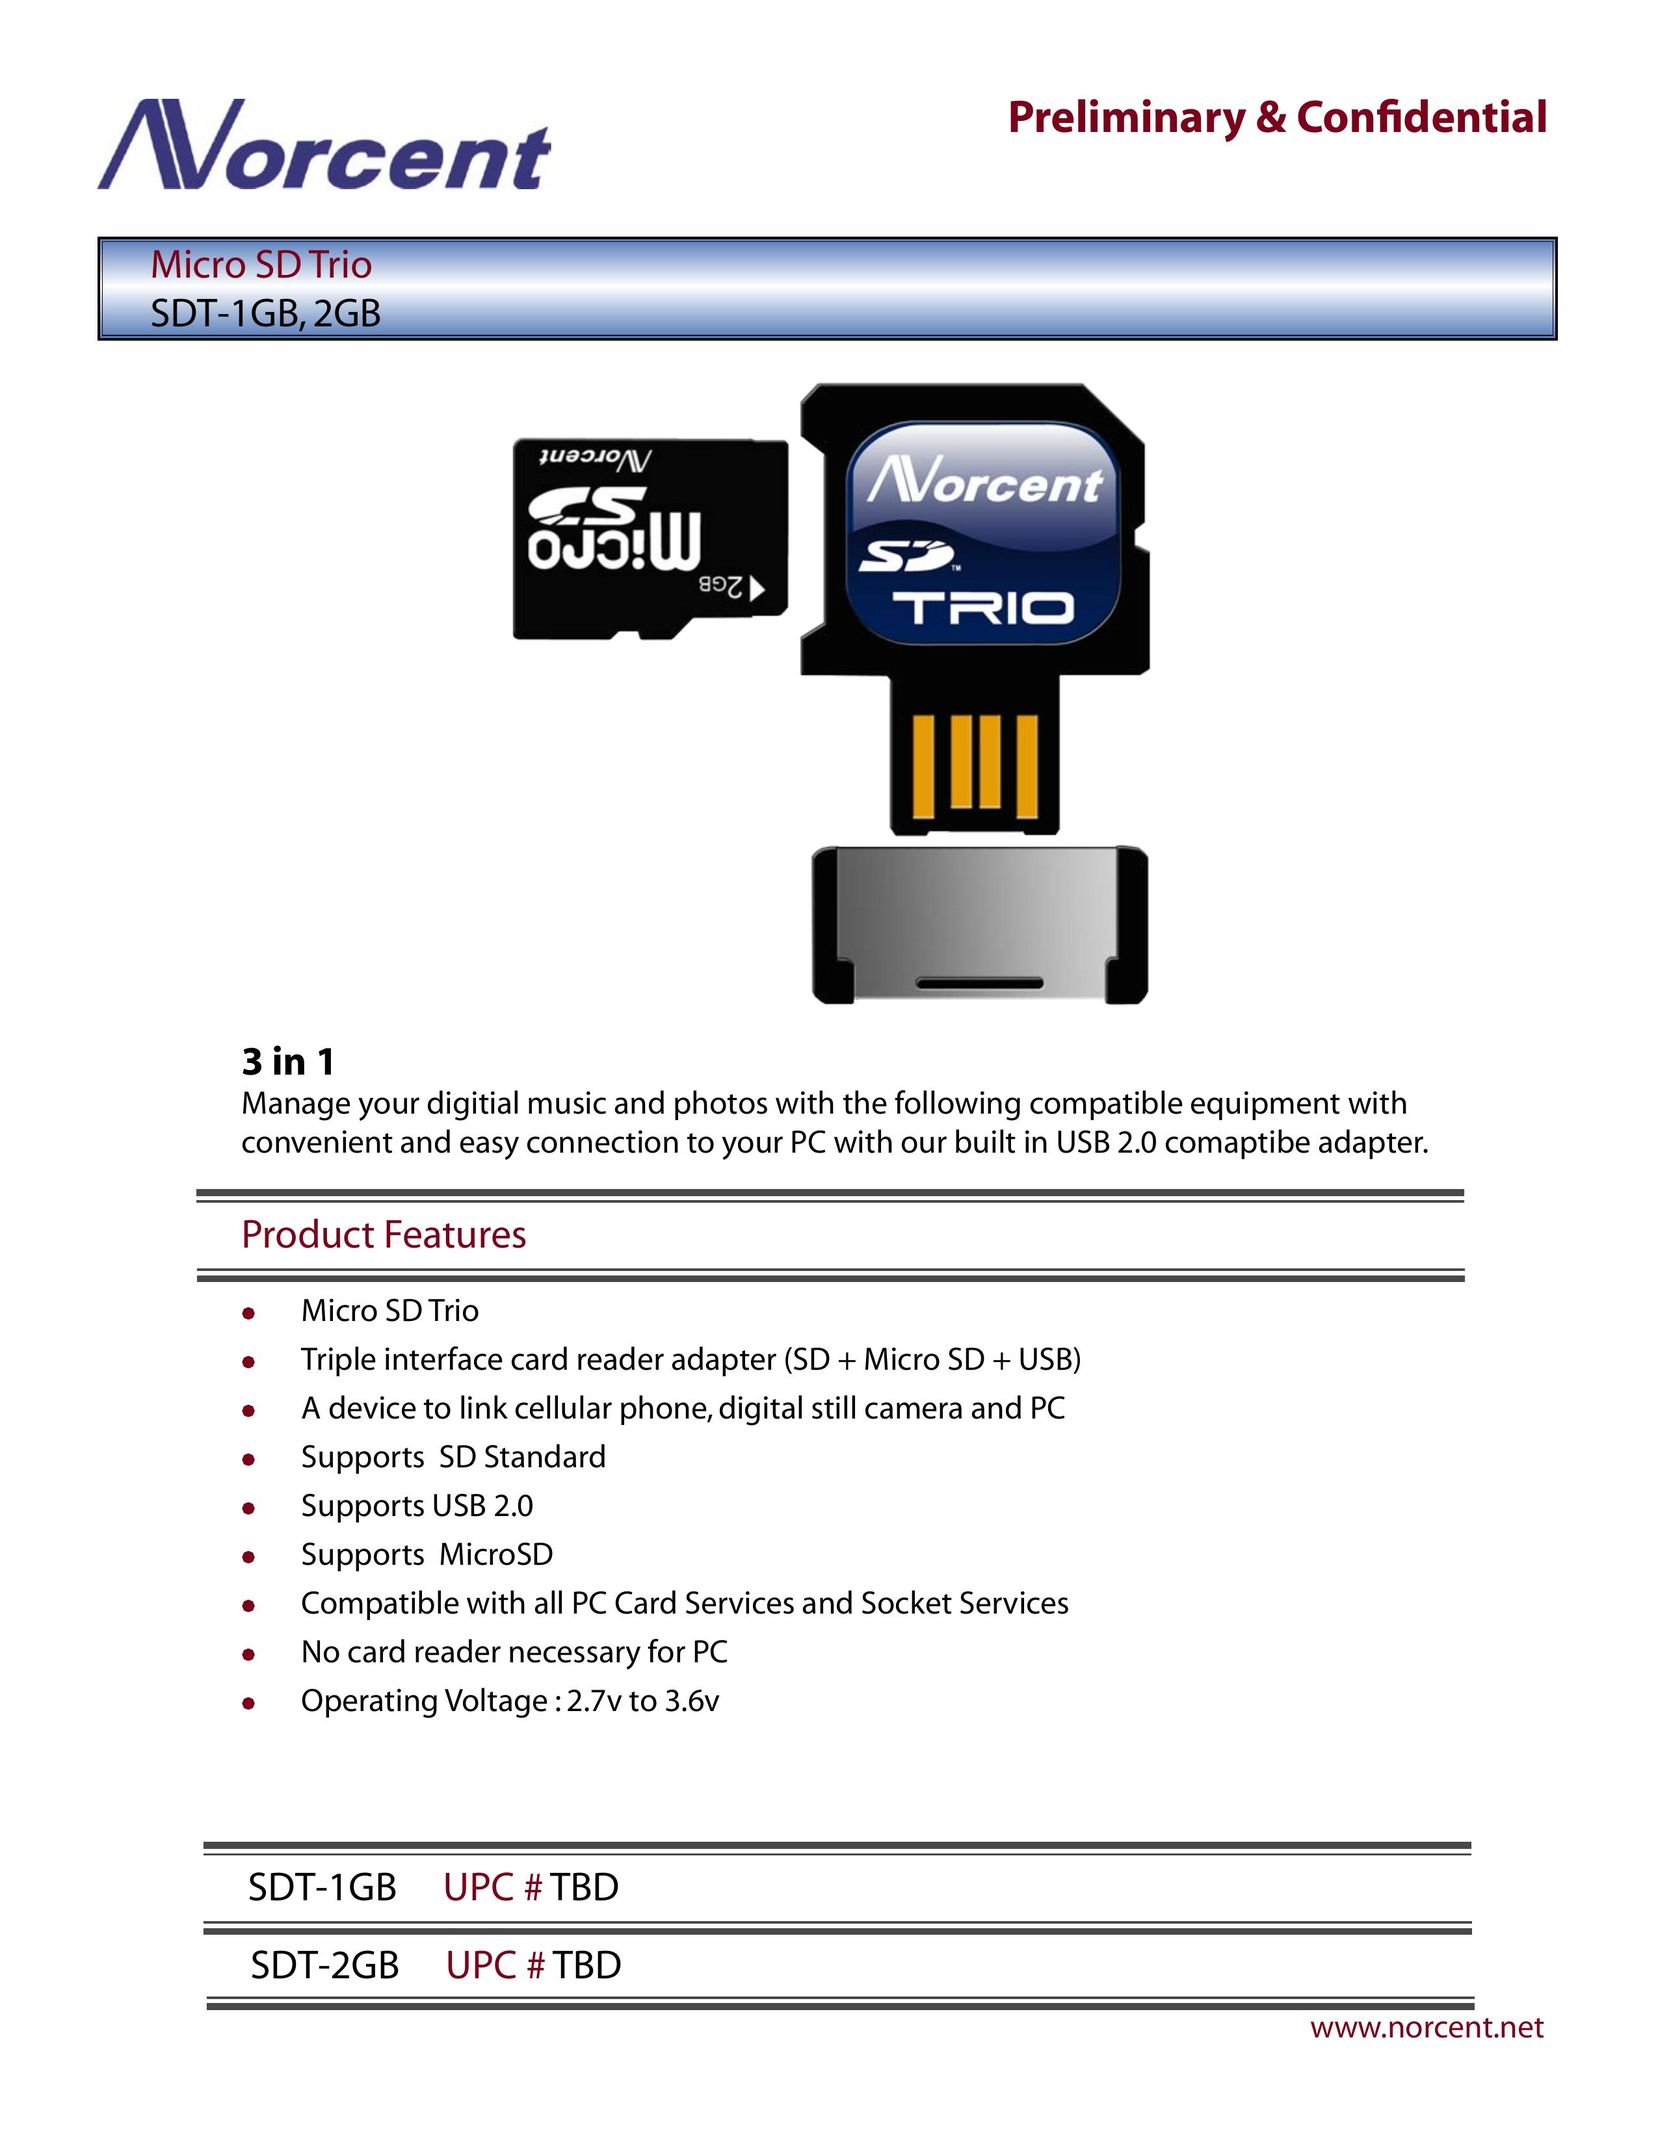 Norcent Technologies SDT-1GB UPC # TBD Computer Drive User Manual